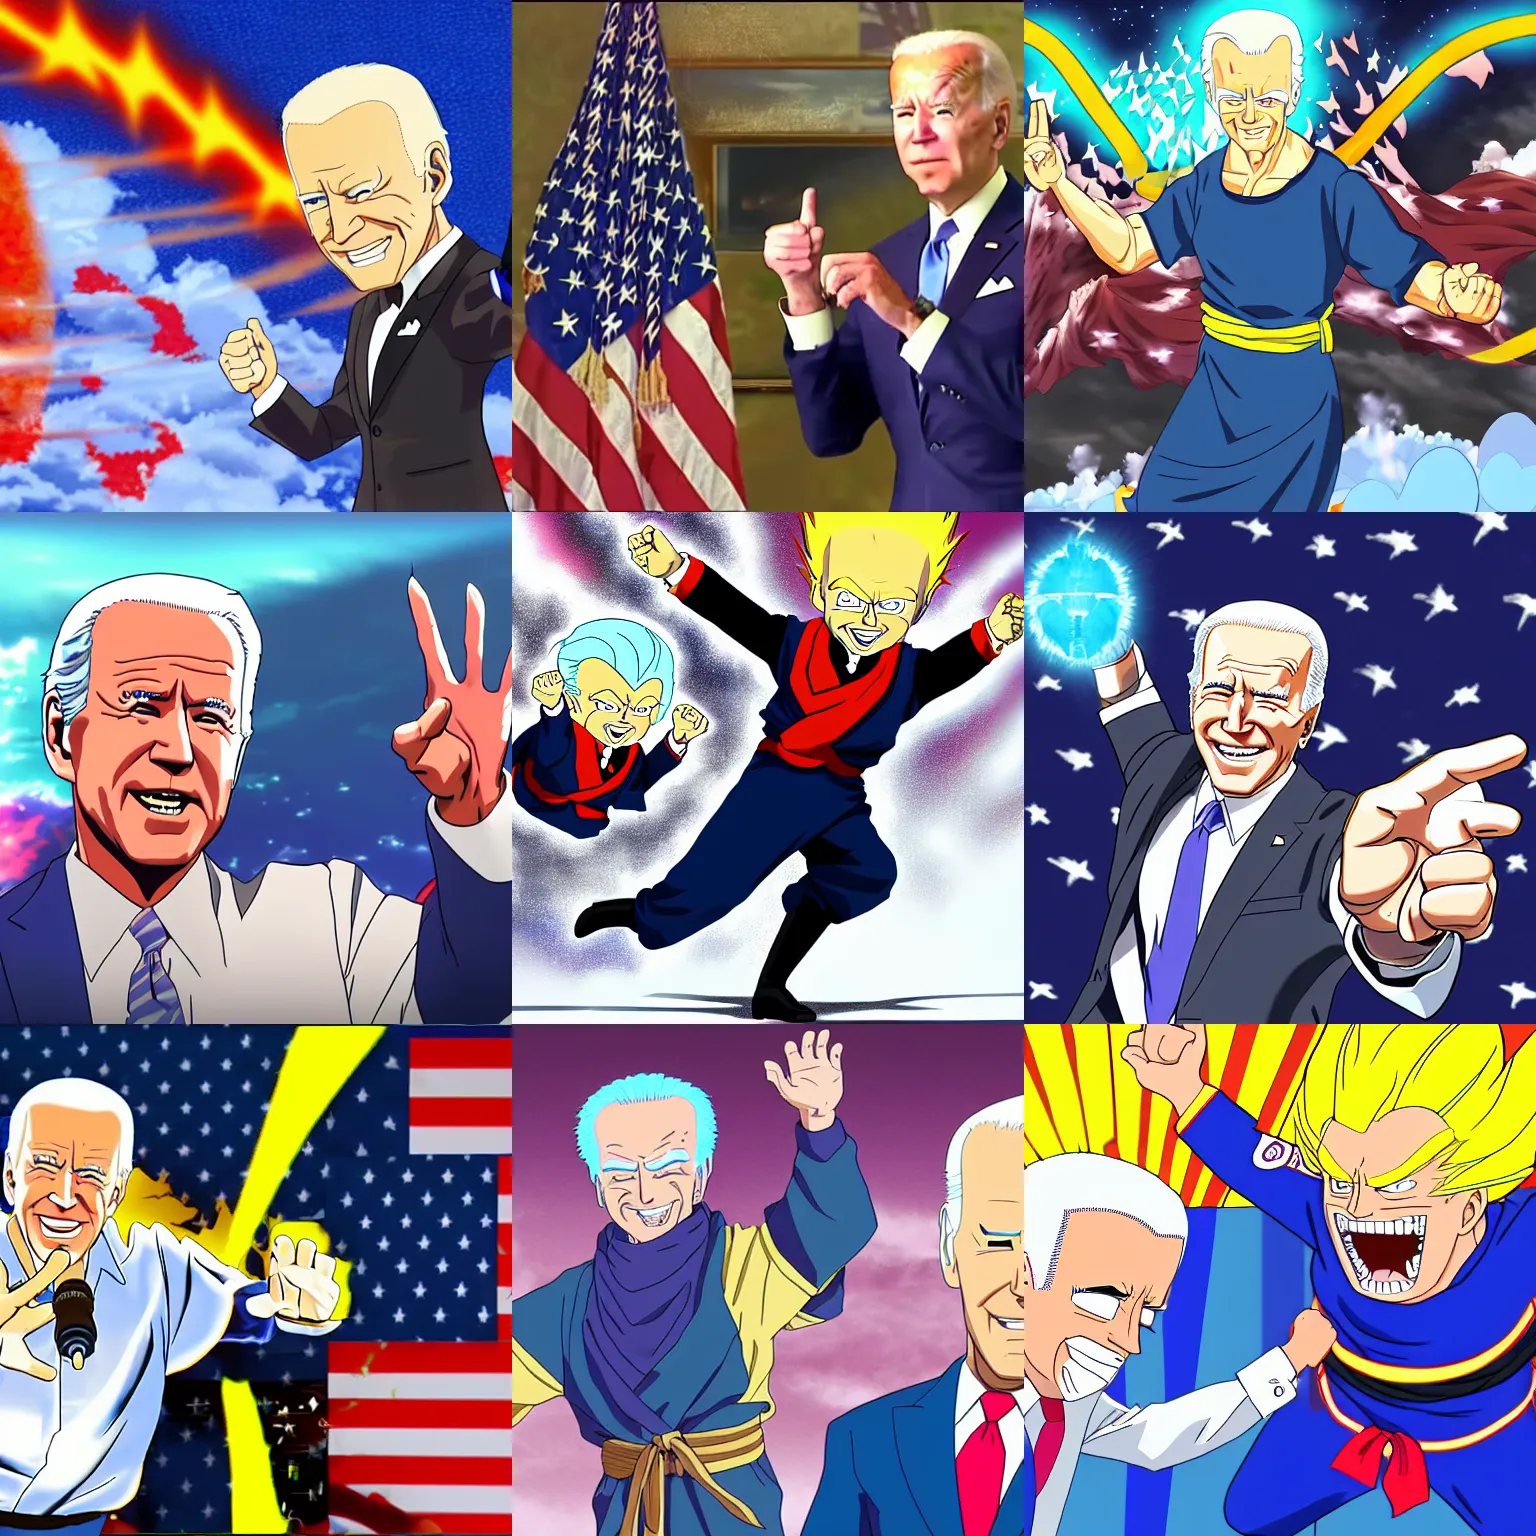 Prompt: Joe Biden is charging the kamehameha wave, anime style, 4k HD